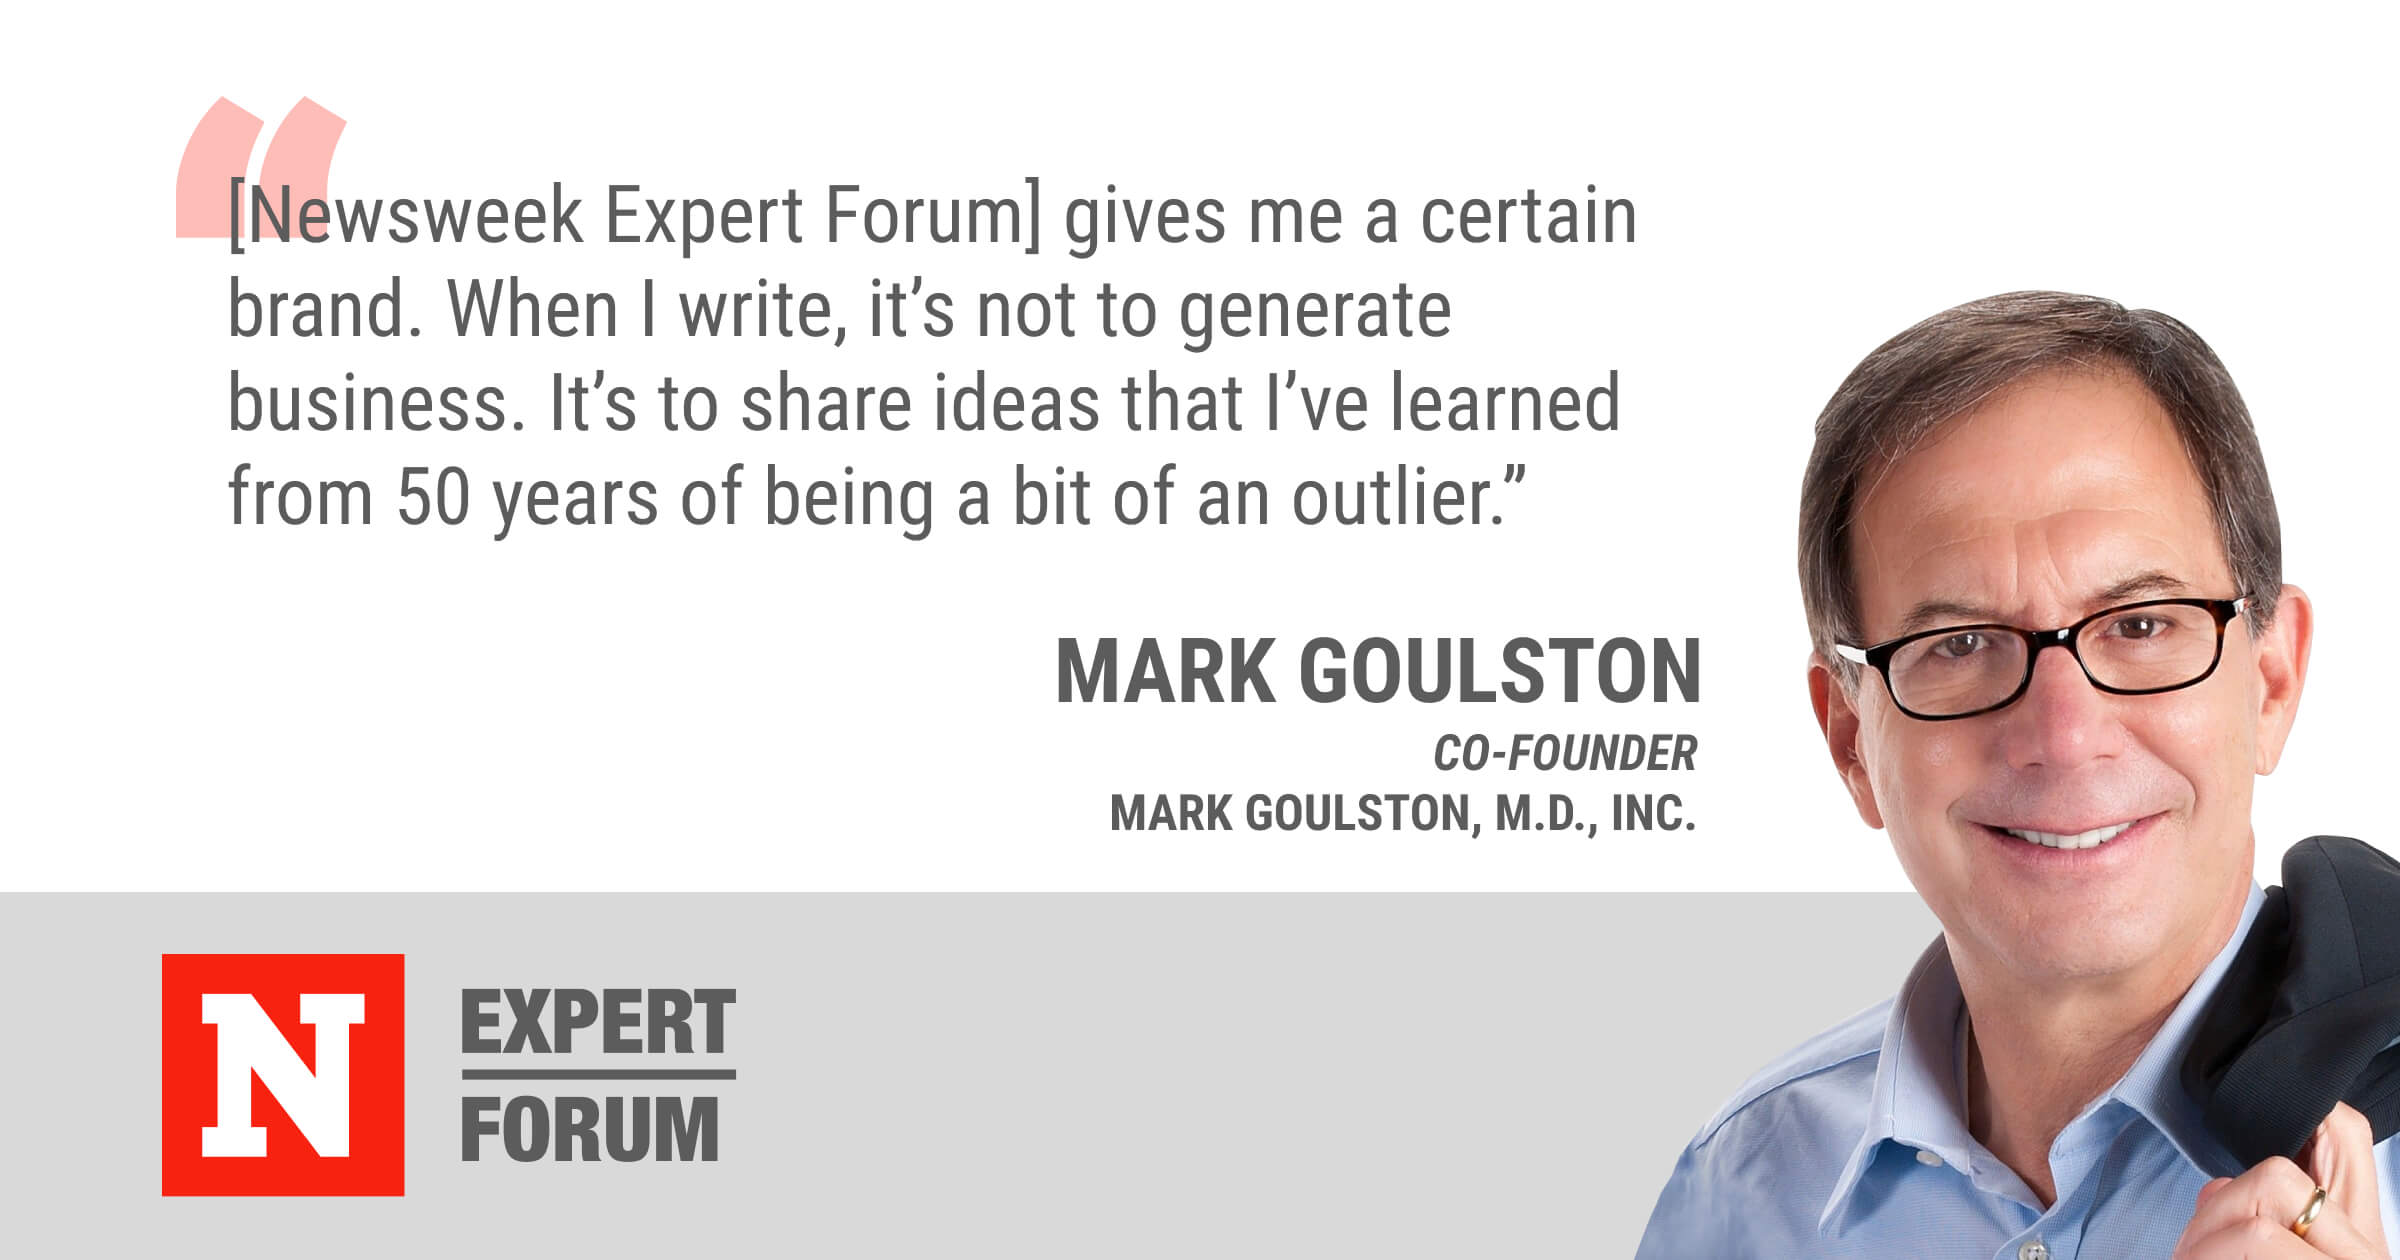 Newsweek Expert Forum member Mark Goulston